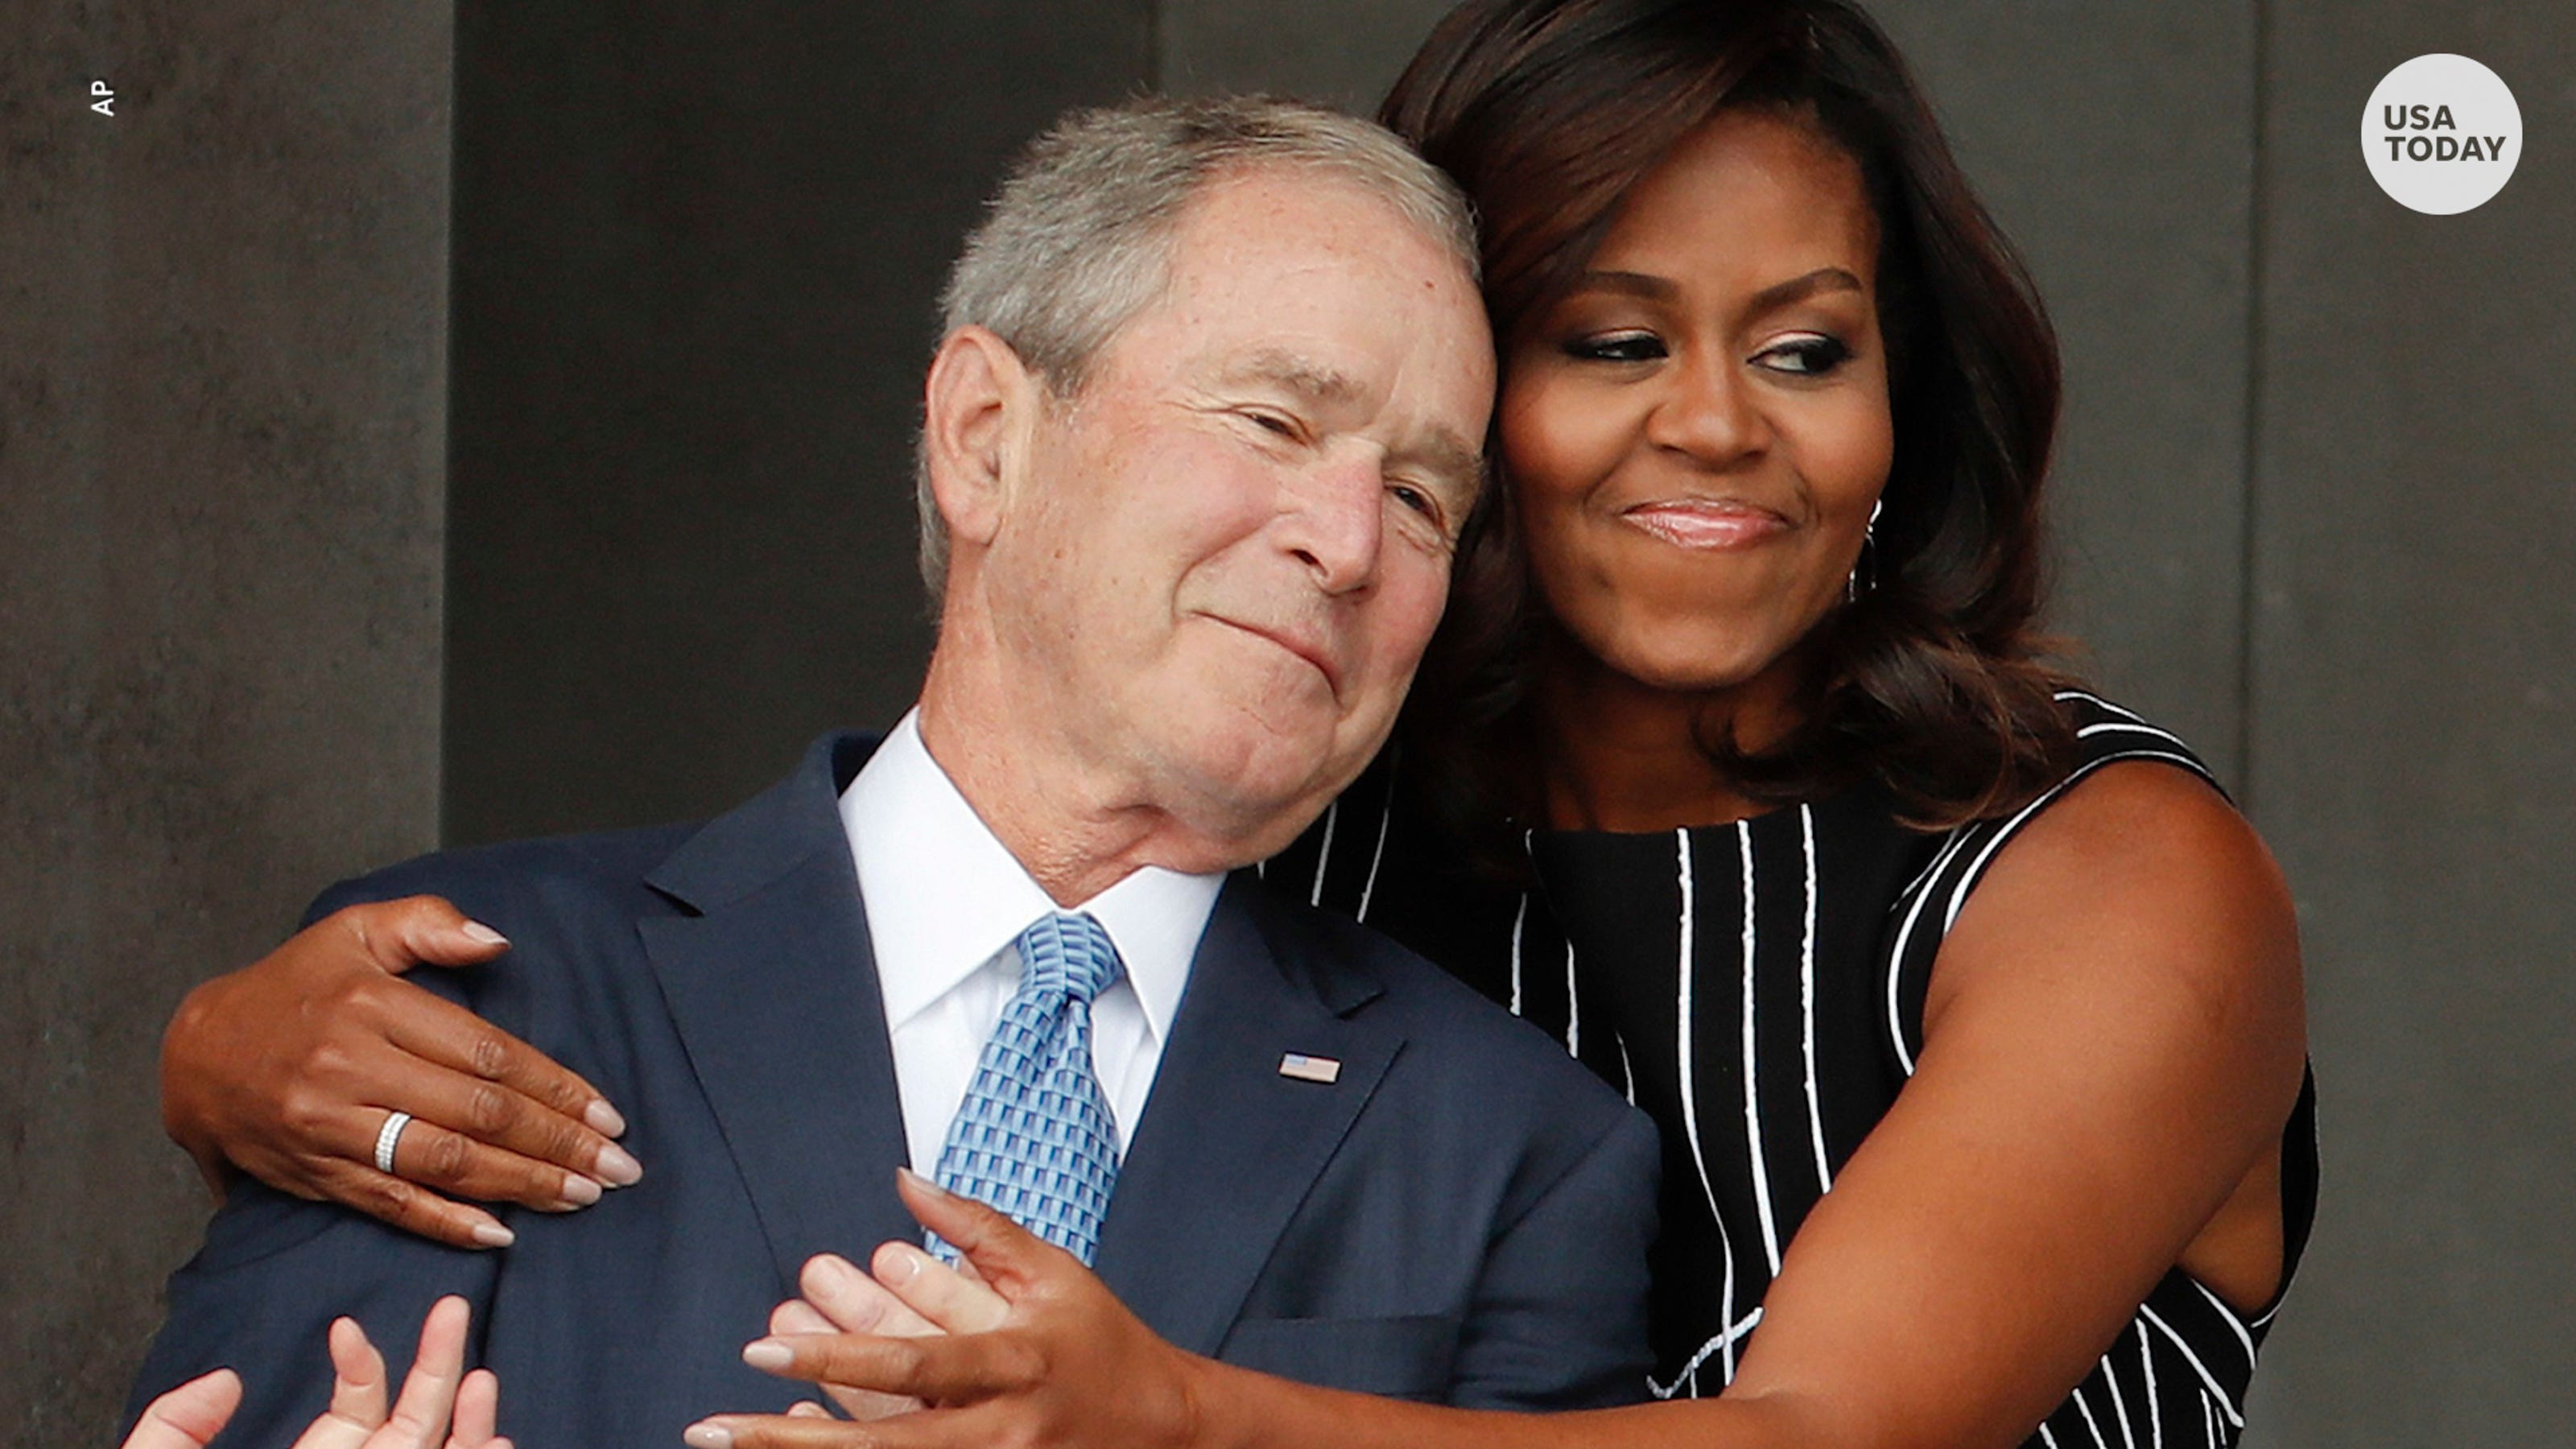 Michelle Obama and George W. Bush's friendship through the years's friendship through the years